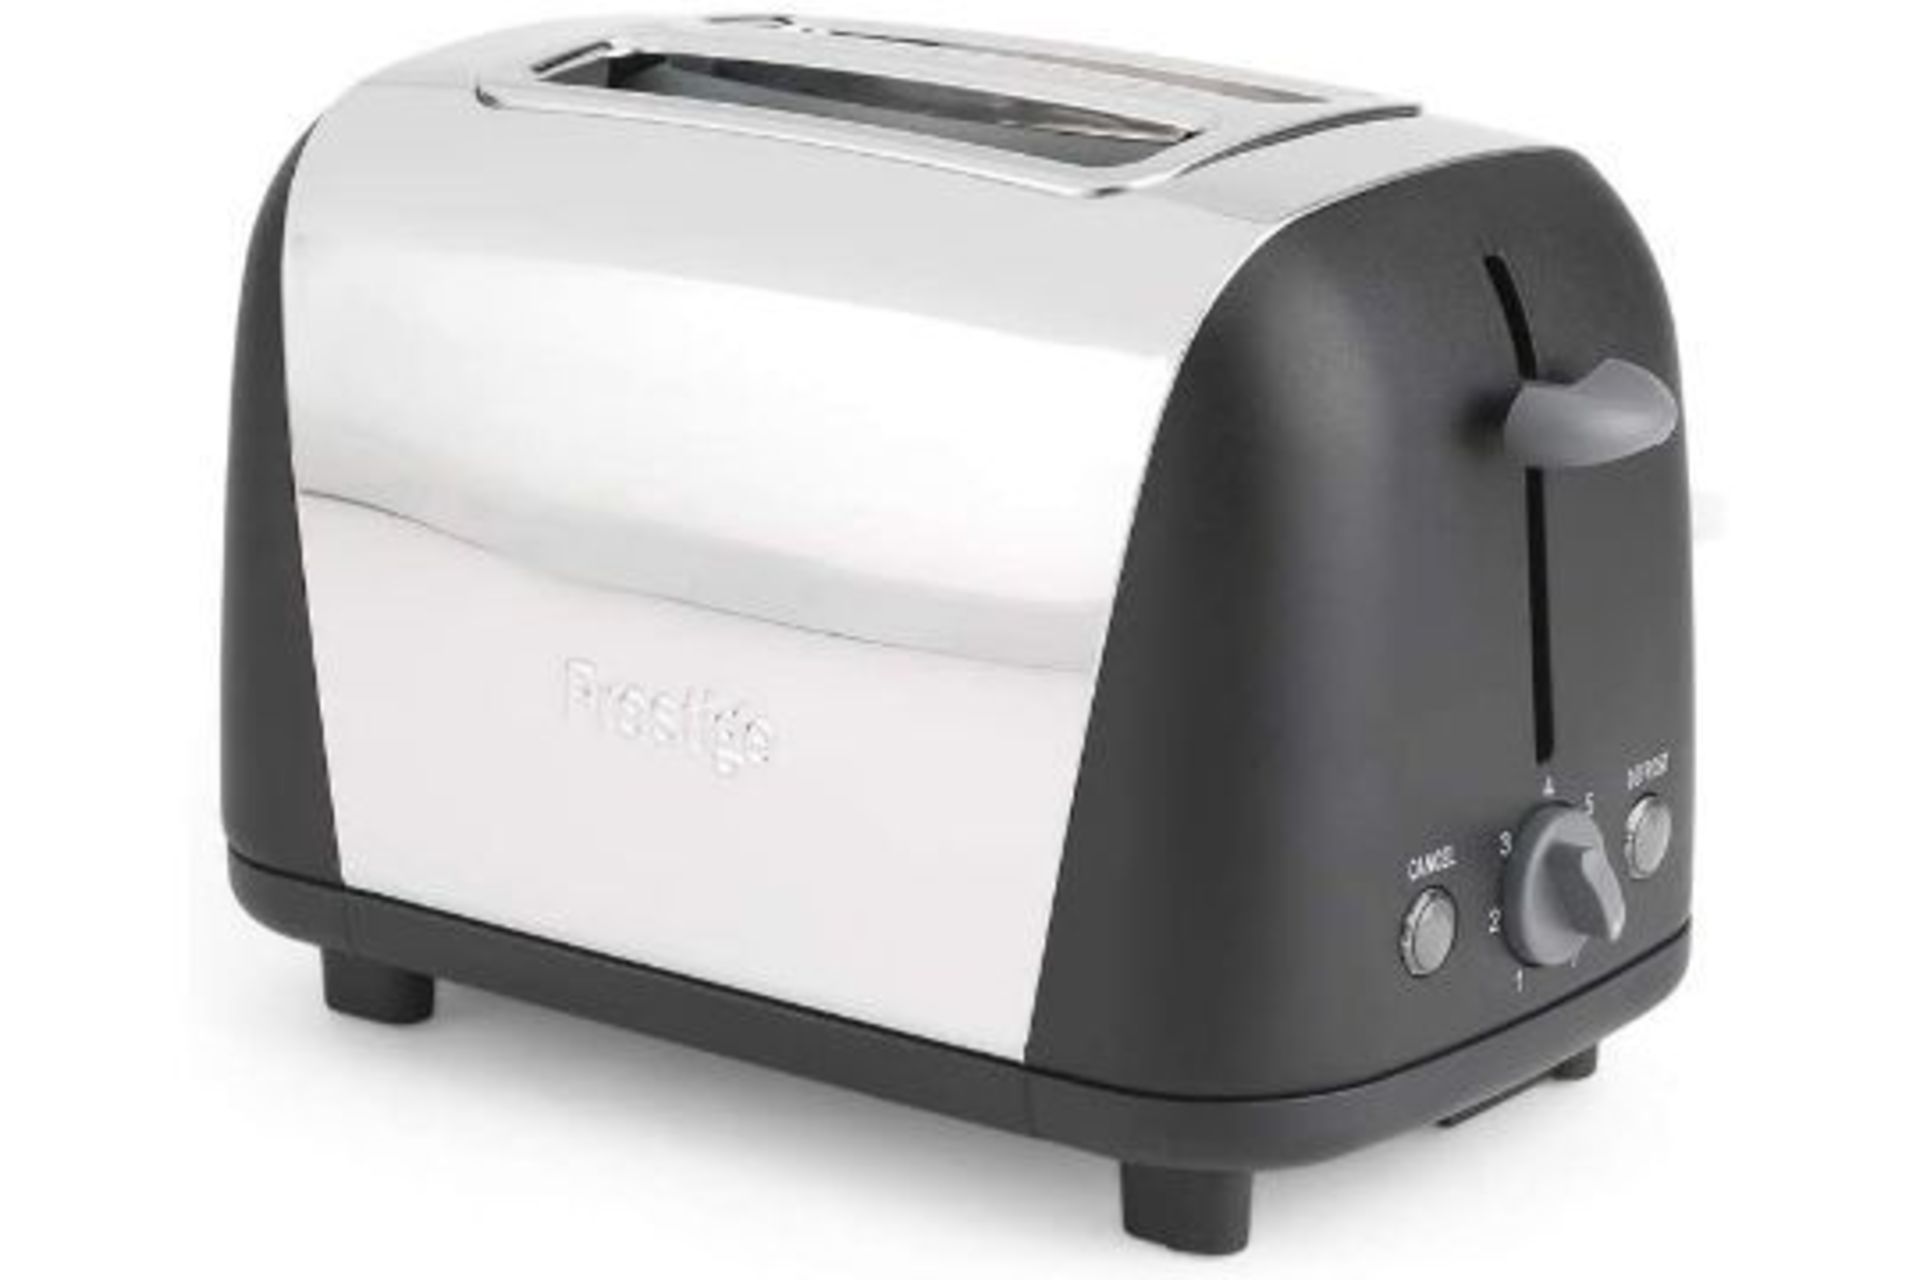 Brand New Prestige 53568 Create 2-Slice Toaster, Stainless Steel/Black, Aluminum - Image 2 of 2